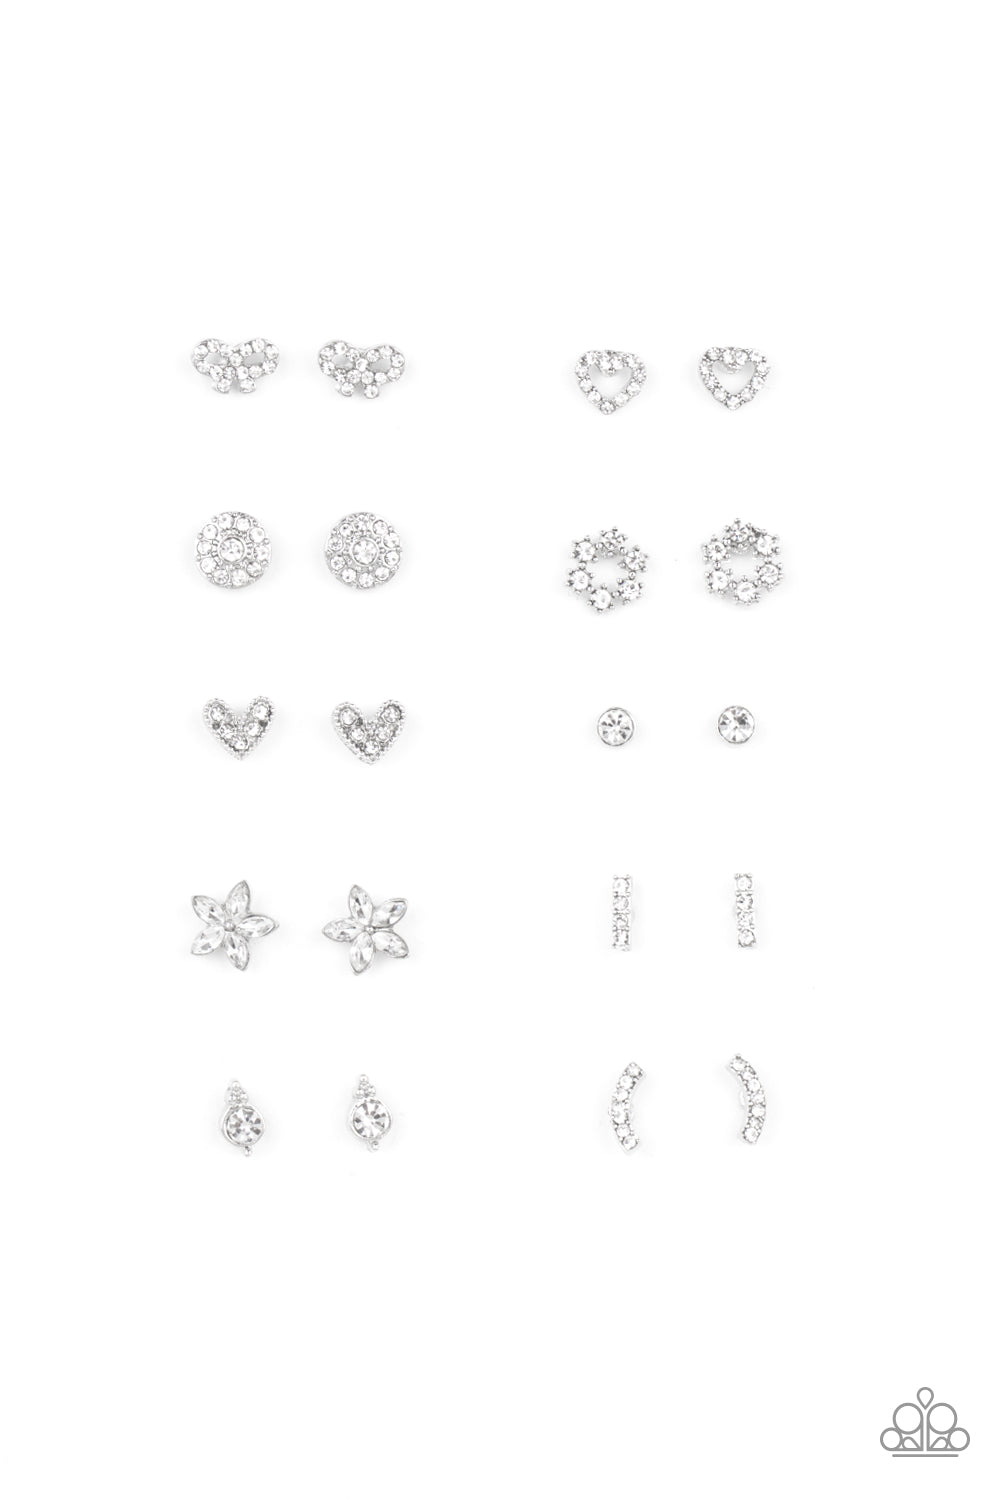 Starlet Shimmer Kids Jewelry Multi Shaped Diamond Stud Earrings Paparazzi - 10 Pack